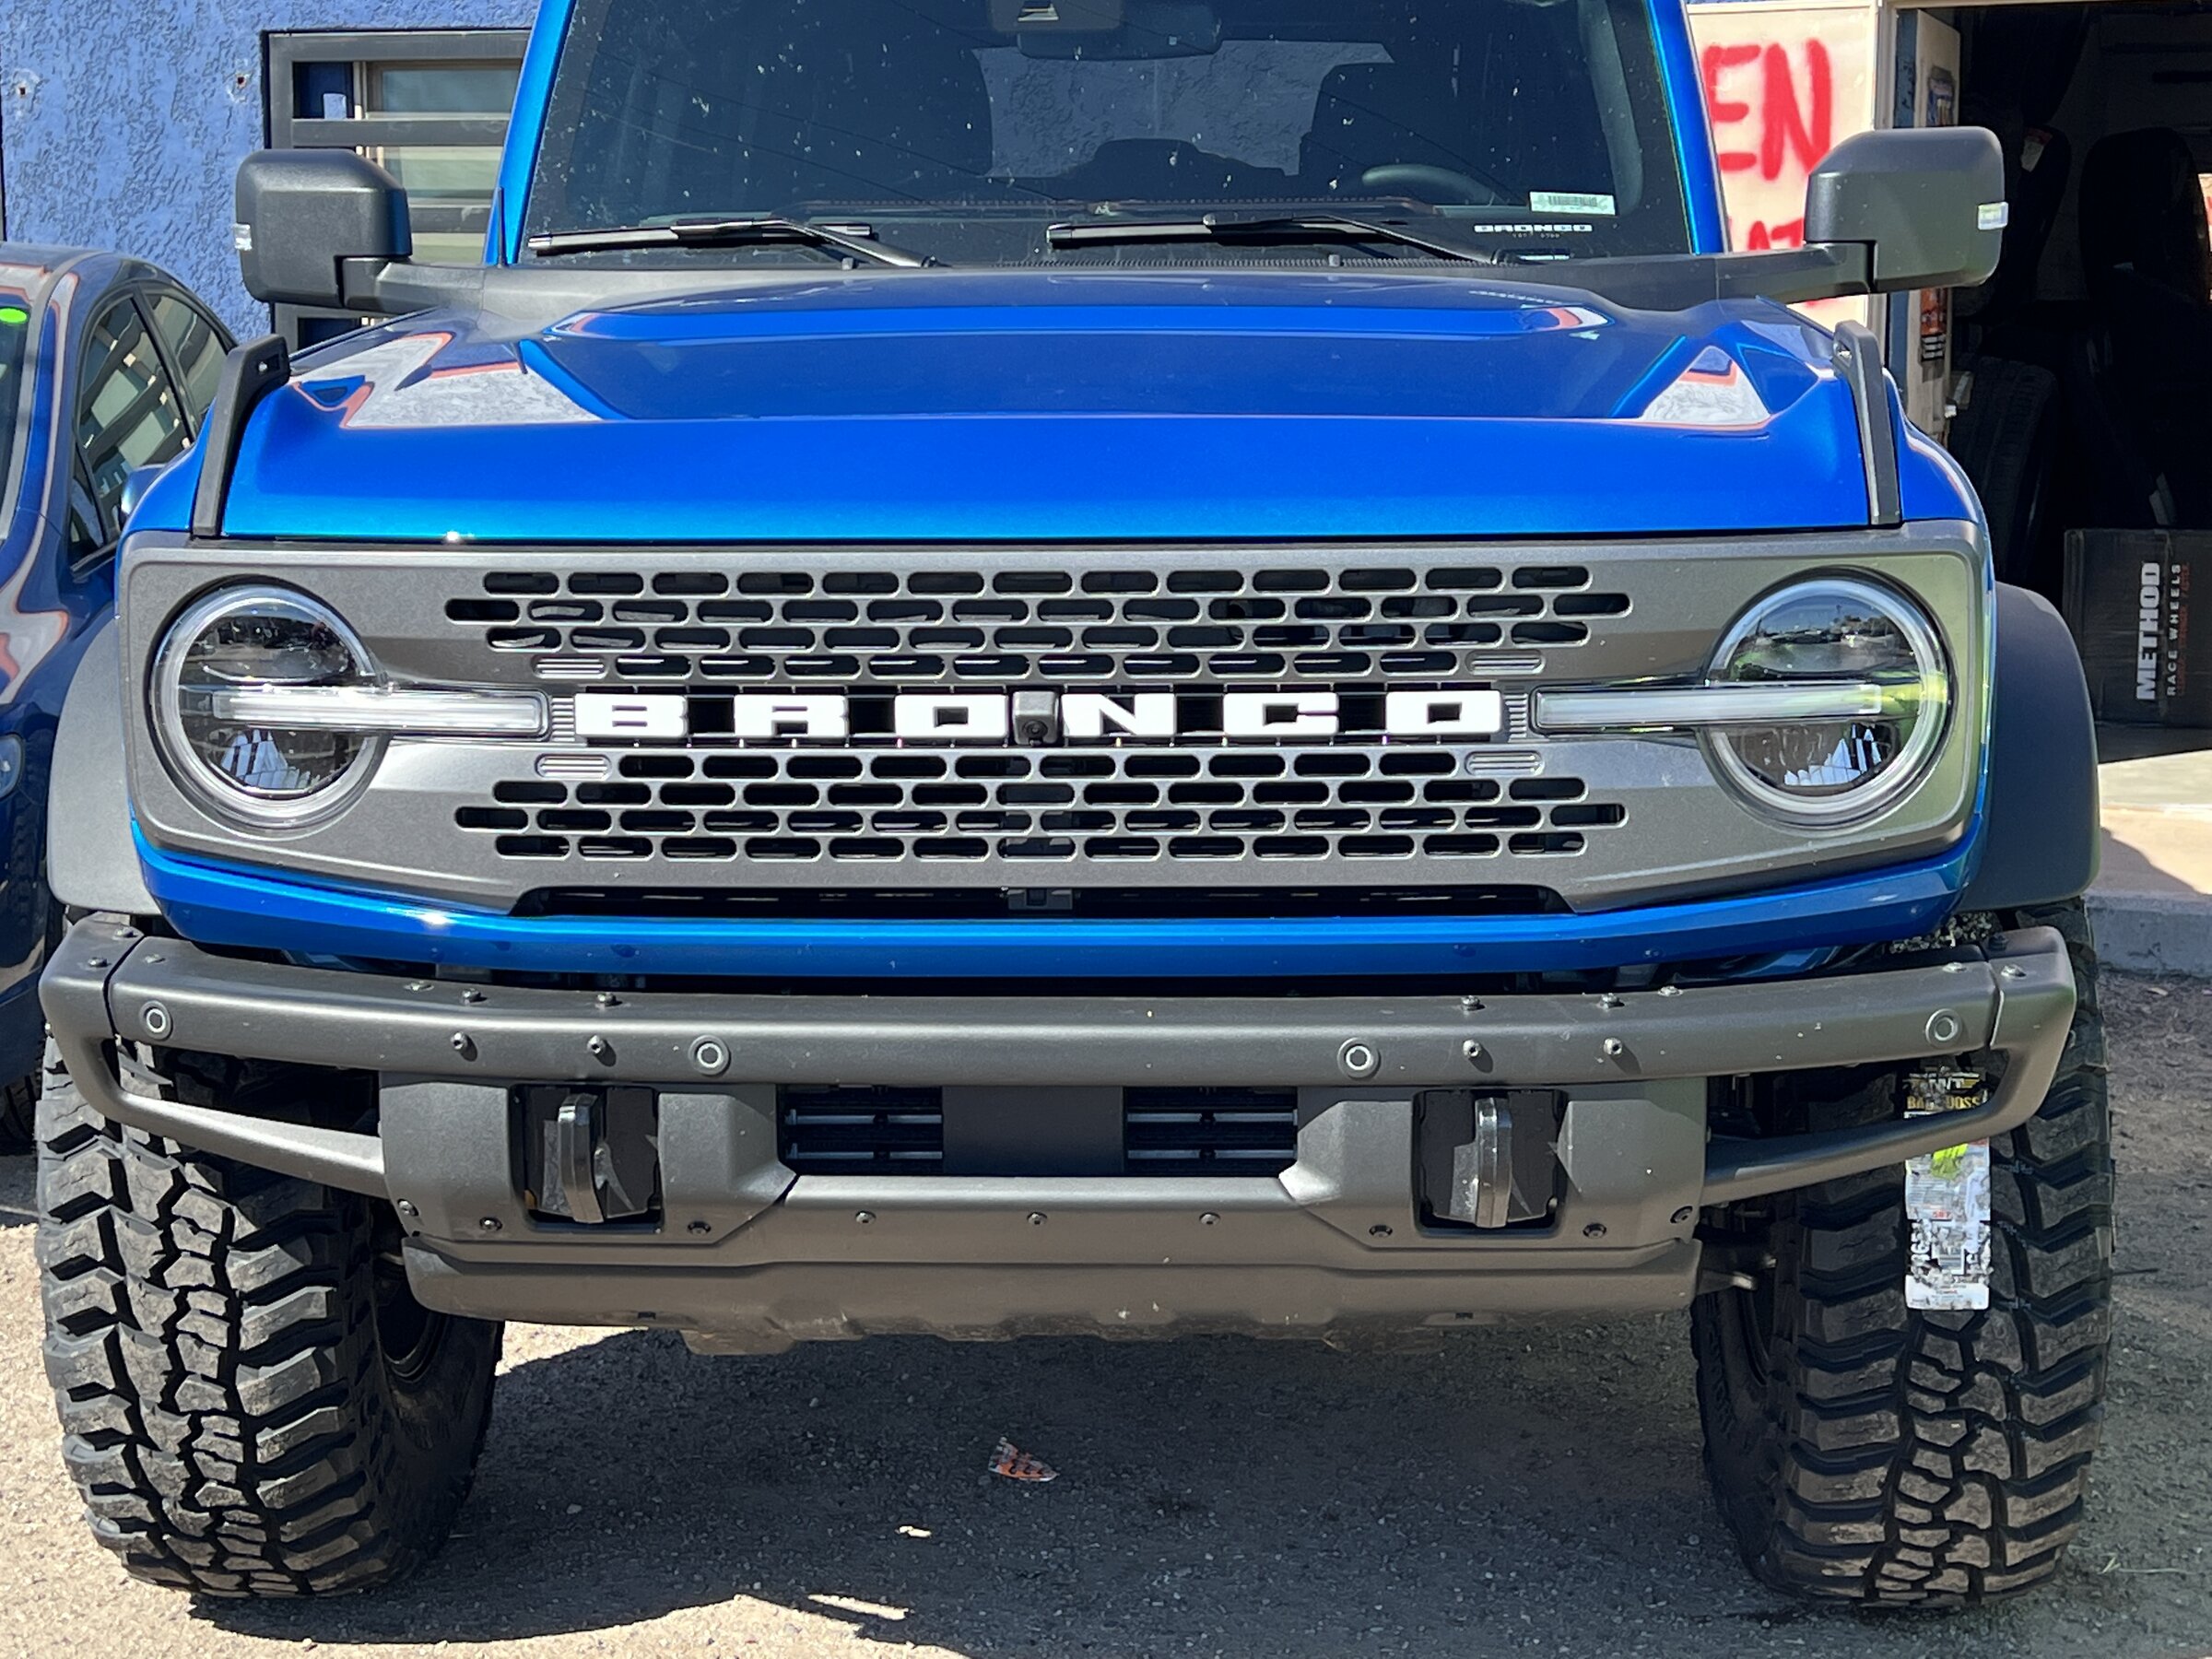 Ford Bronco Rockdawg84's Badsquach 21 Adventure and Build Thread "Wild Blue" IMG_0581.JPG